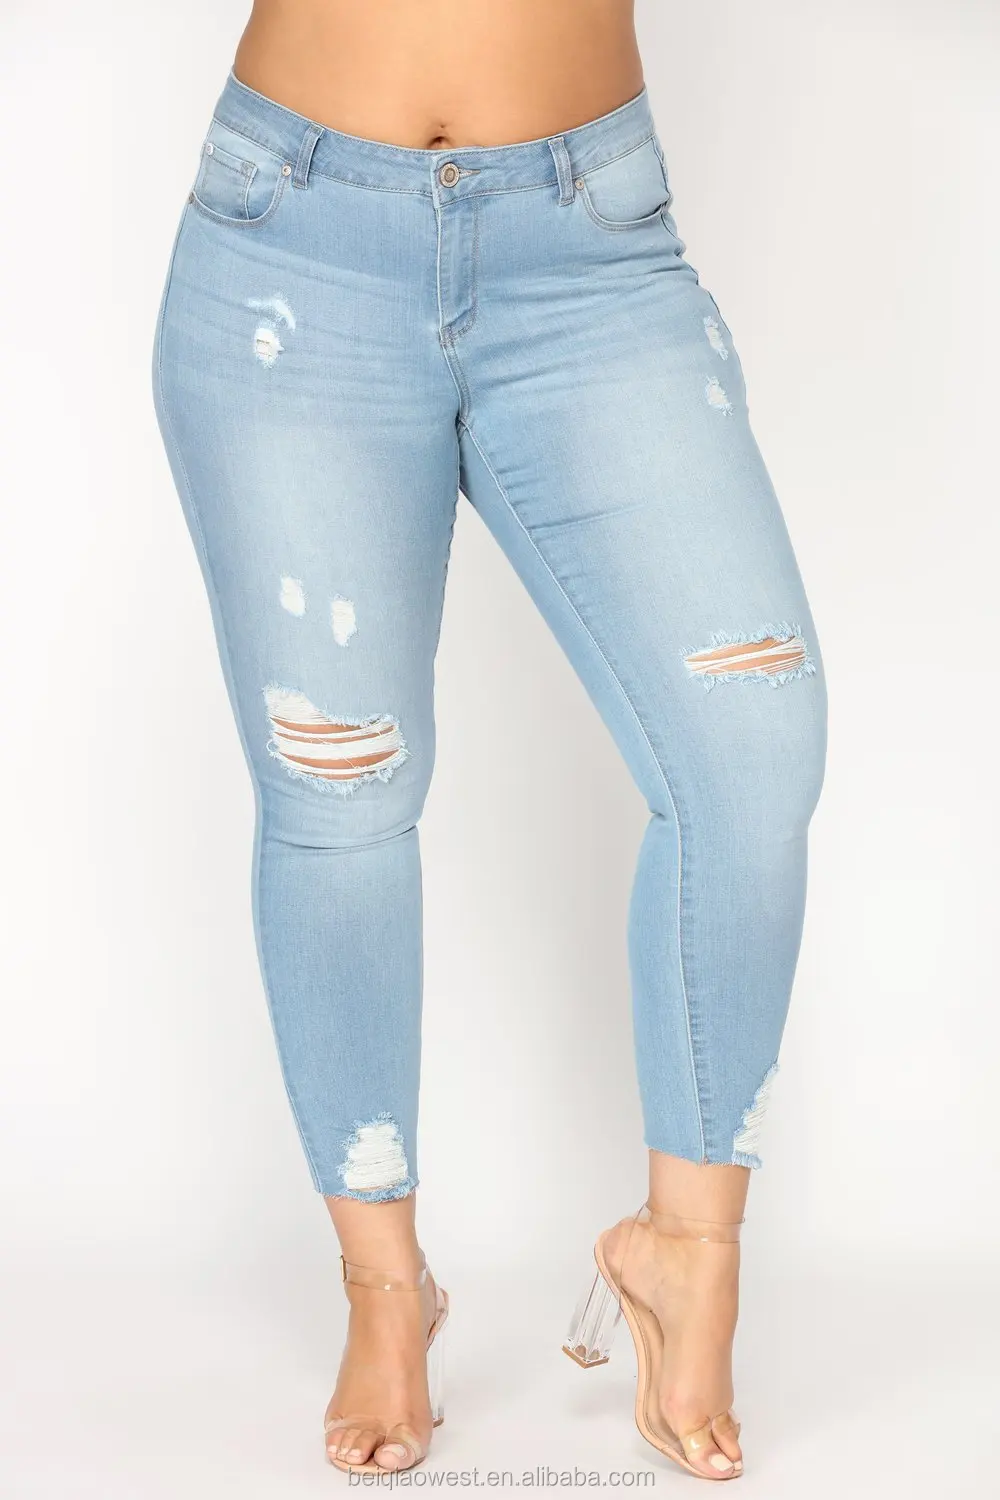 Wholesale Fashion Sexy Women Plus Size Colombian Butt Lift Jeans Hight